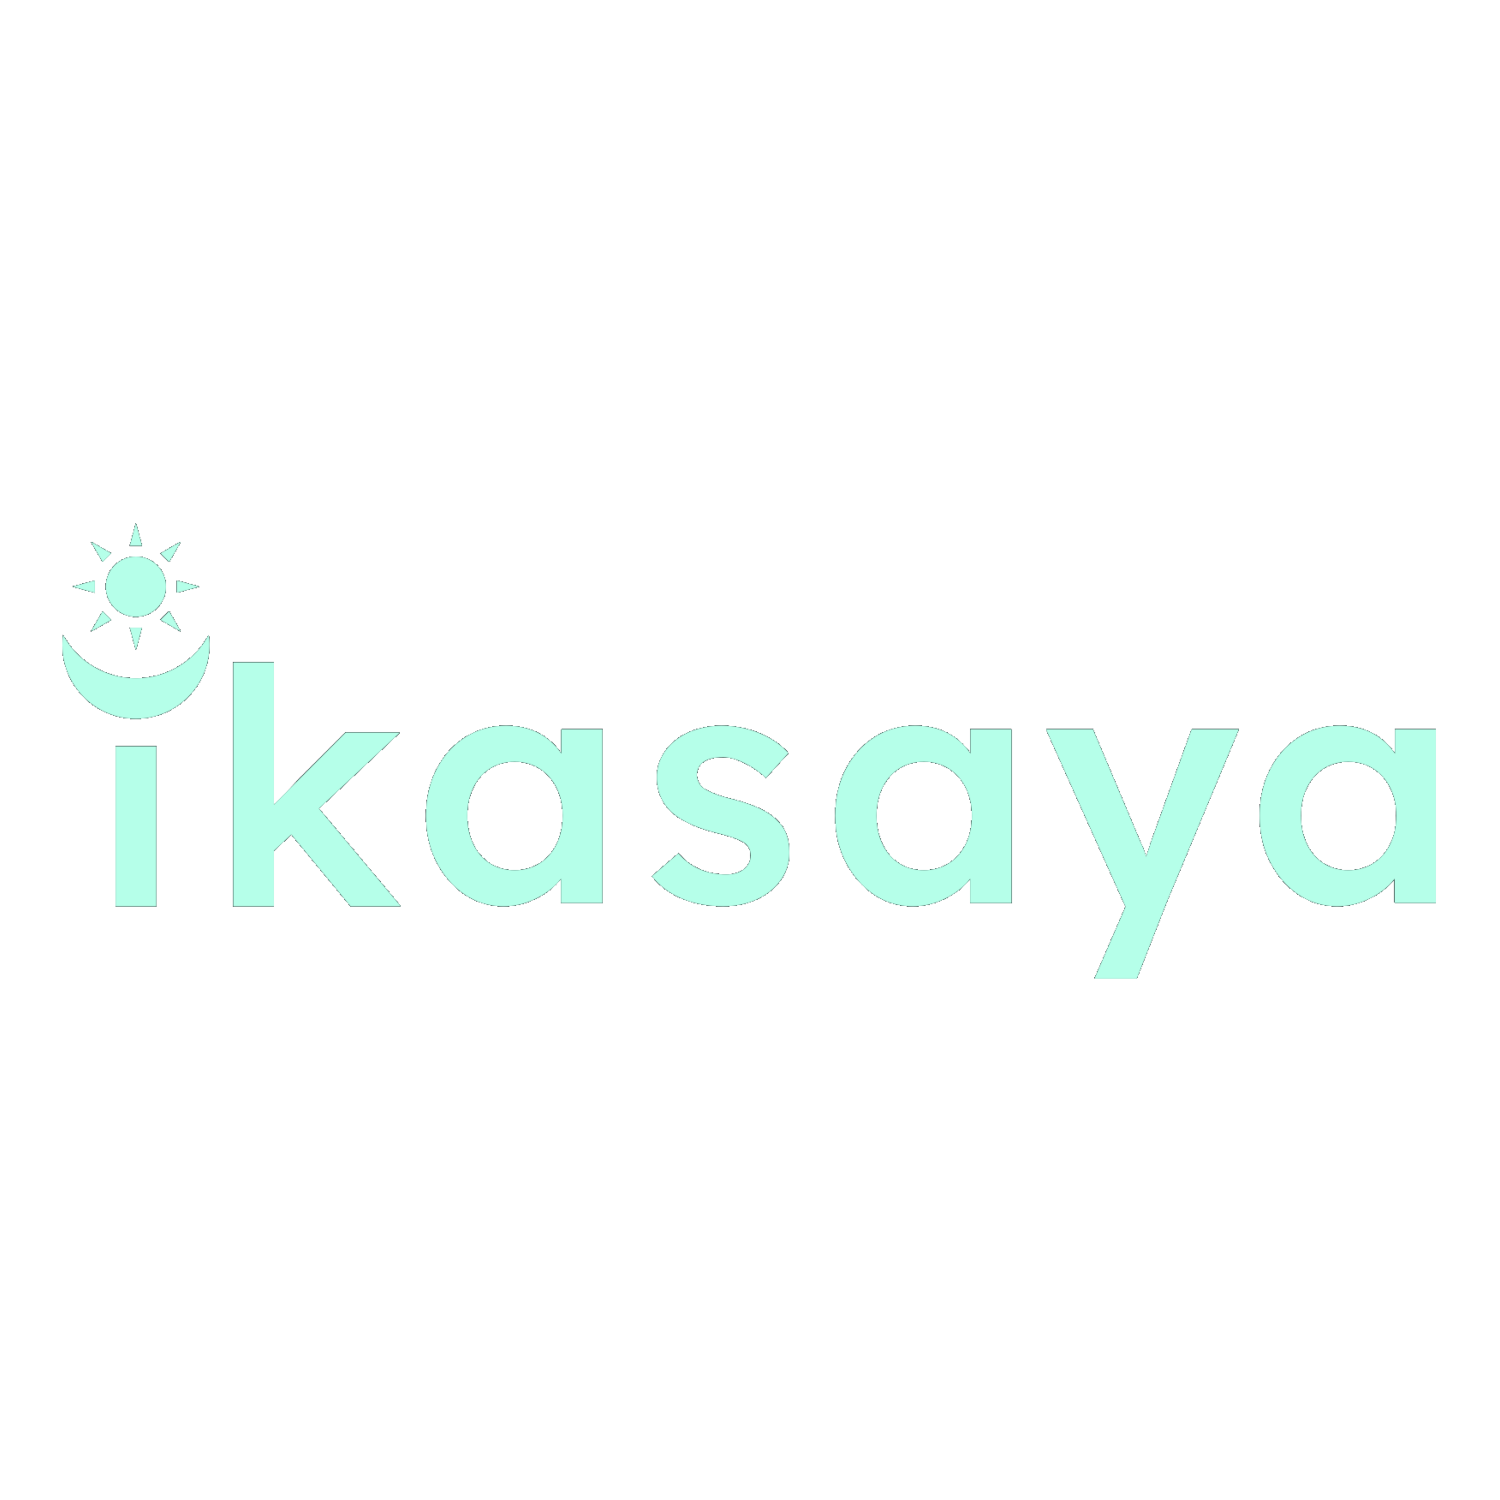 IKASAYA brand image